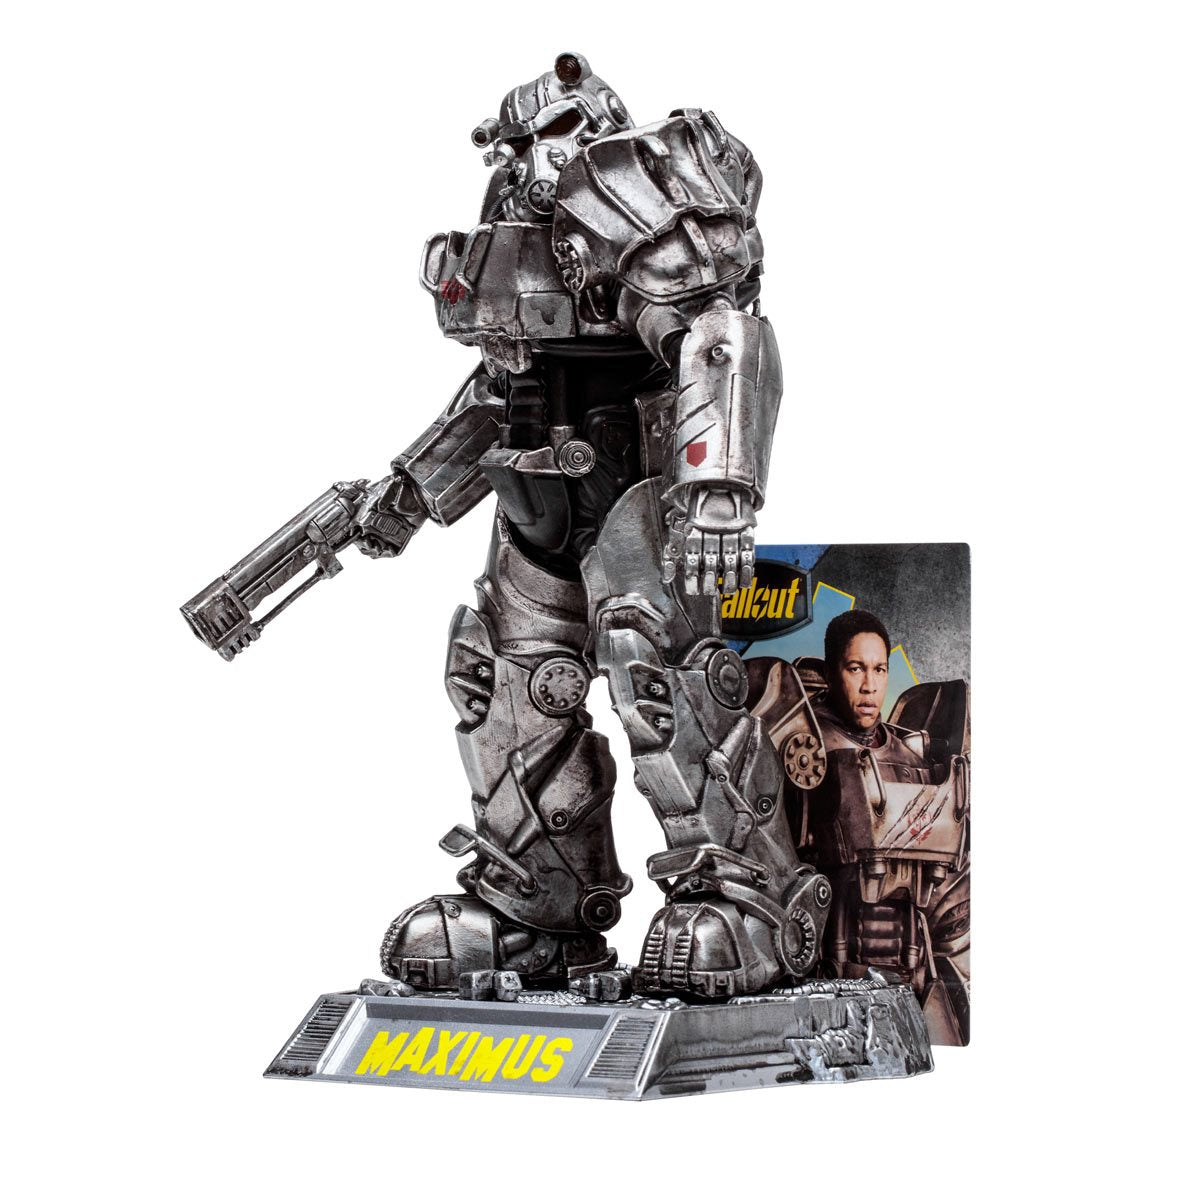 McFarlane Estatua Movie Maniacs: Fallout - Maximus Limited Edition 6 Pulgadas